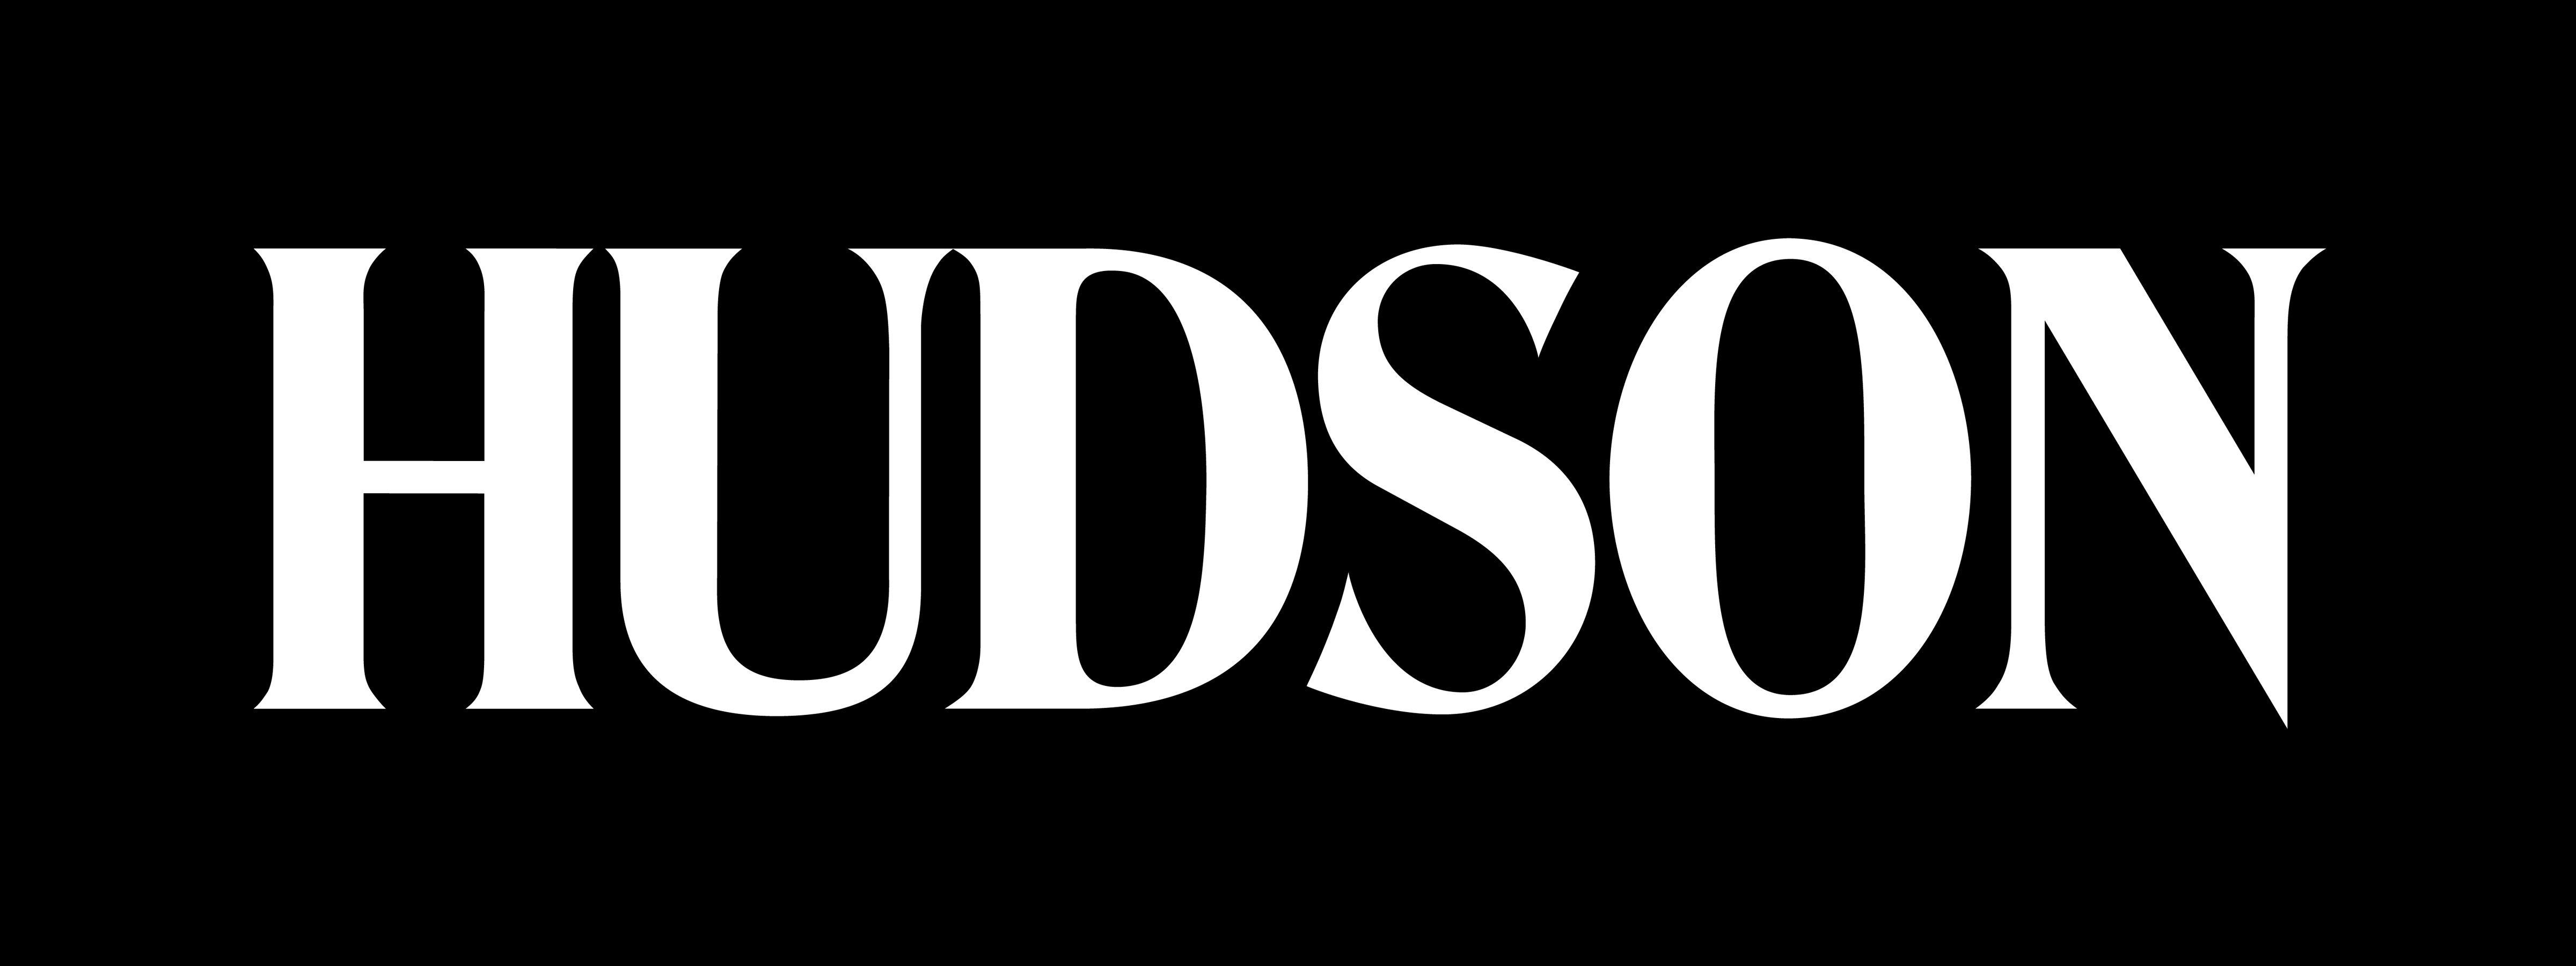 Hudson Logo - Hudson Logos